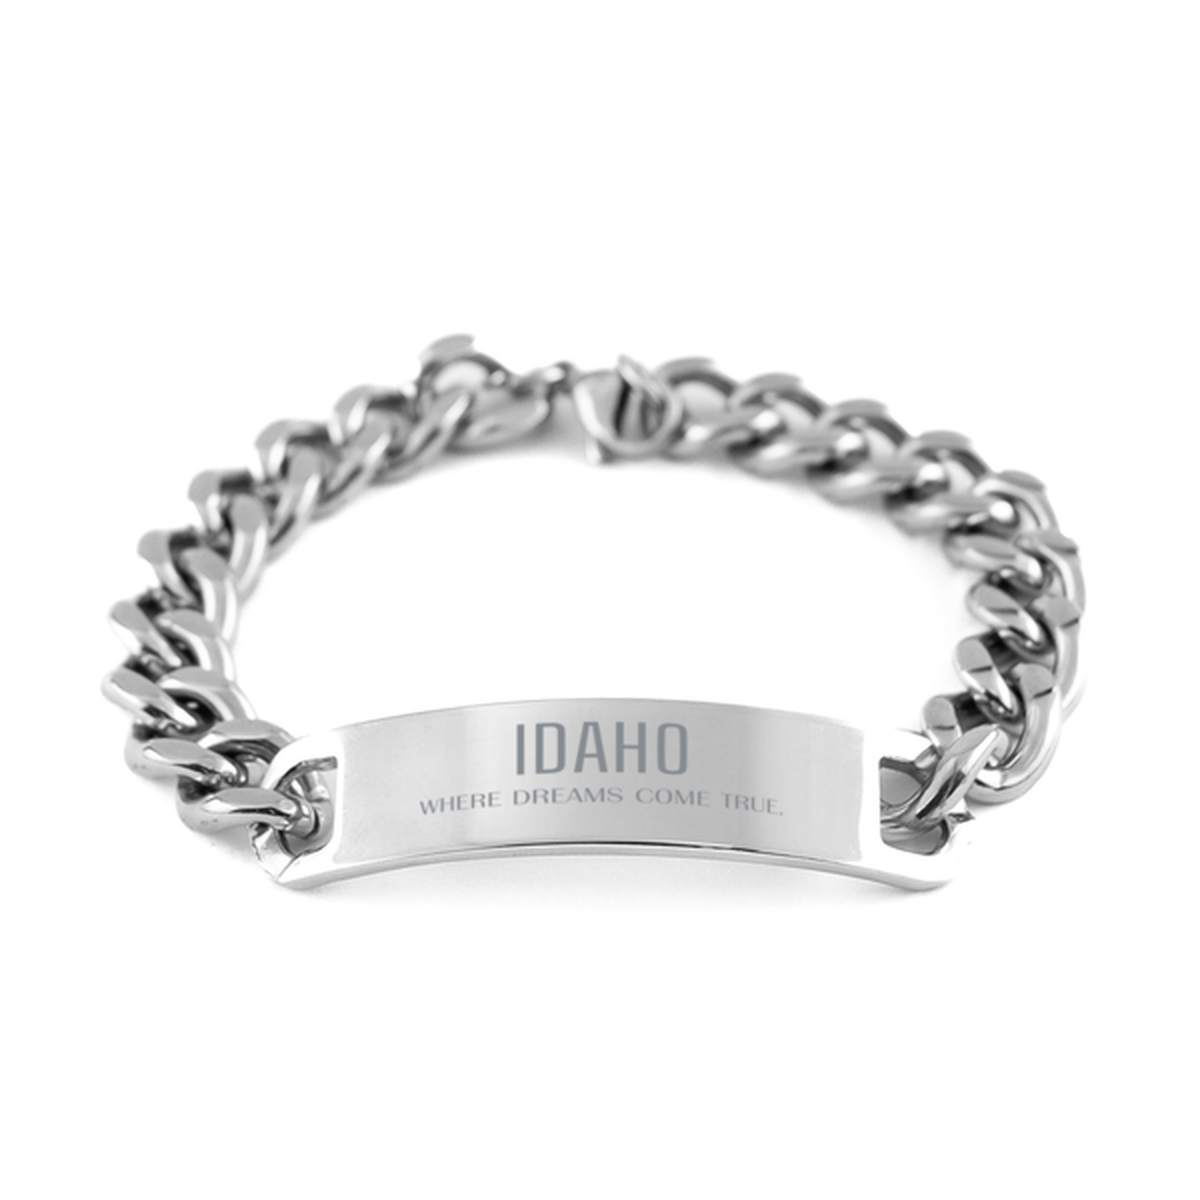 Love Idaho State Cuban Chain Stainless Steel Bracelet, Idaho Where dreams come true, Birthday Inspirational Gifts For Idaho Men, Women, Friends